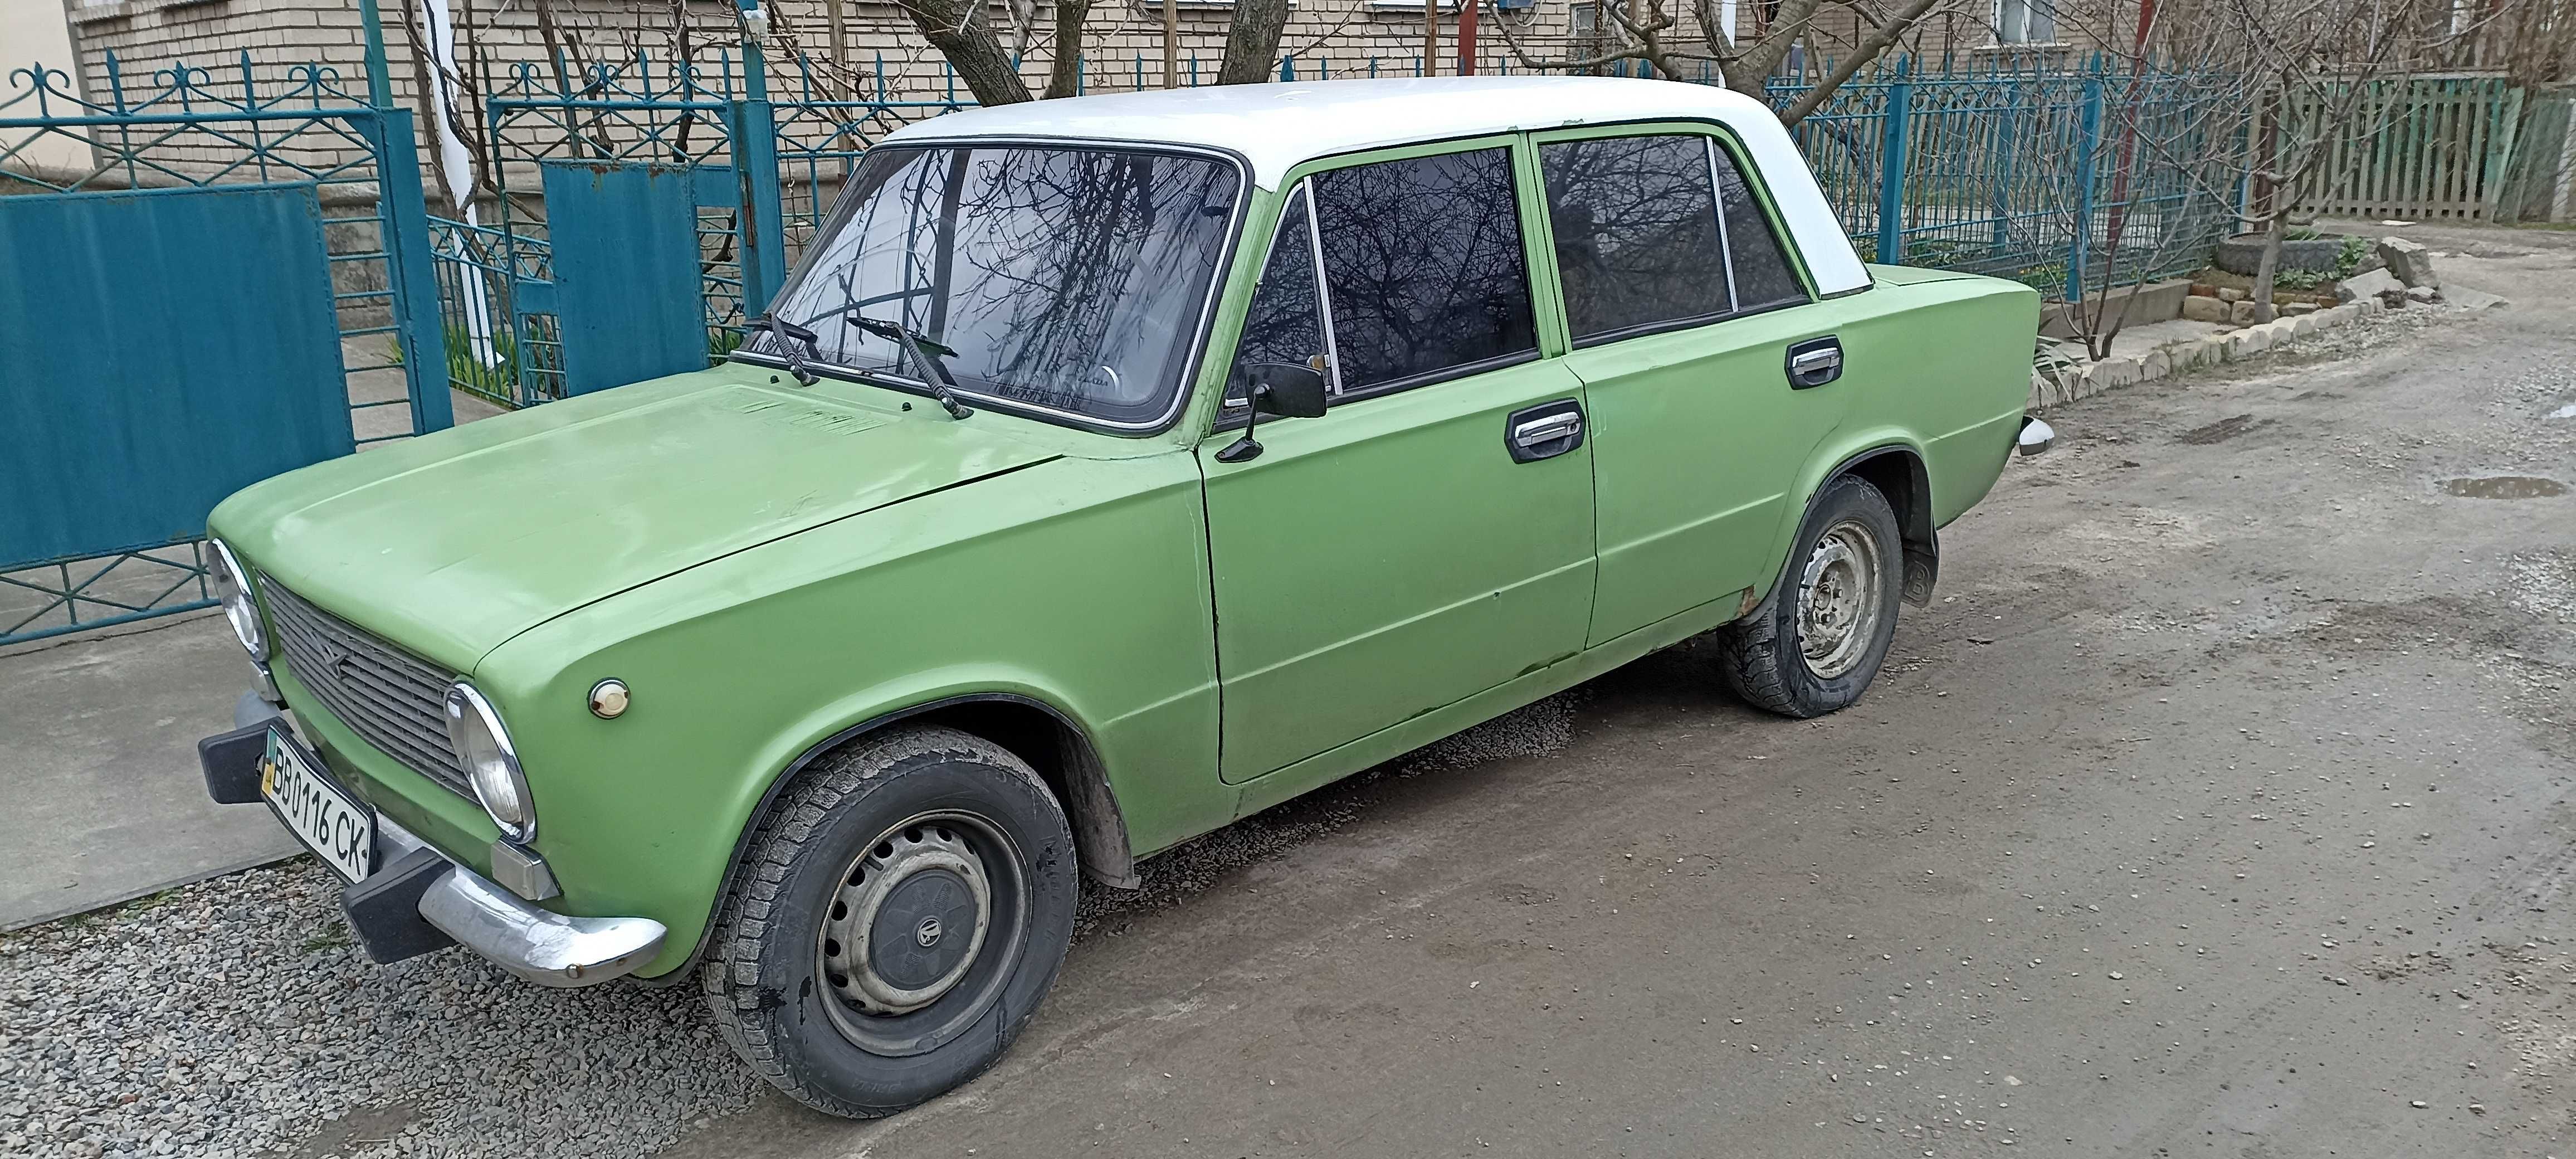 Продам ВАЗ-01 1979 г.